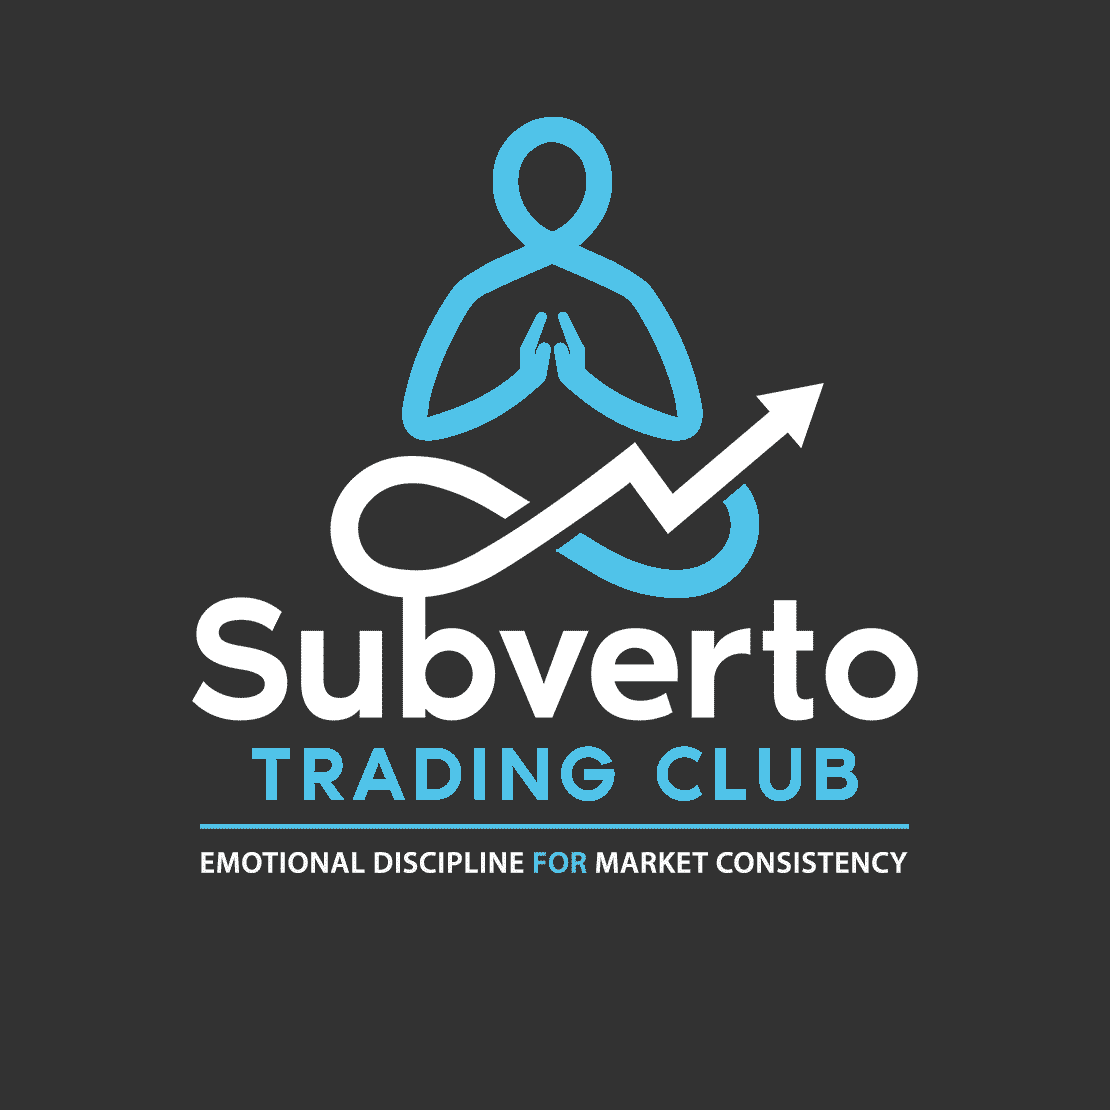 Subverto Trading Club Logo Square with slogan